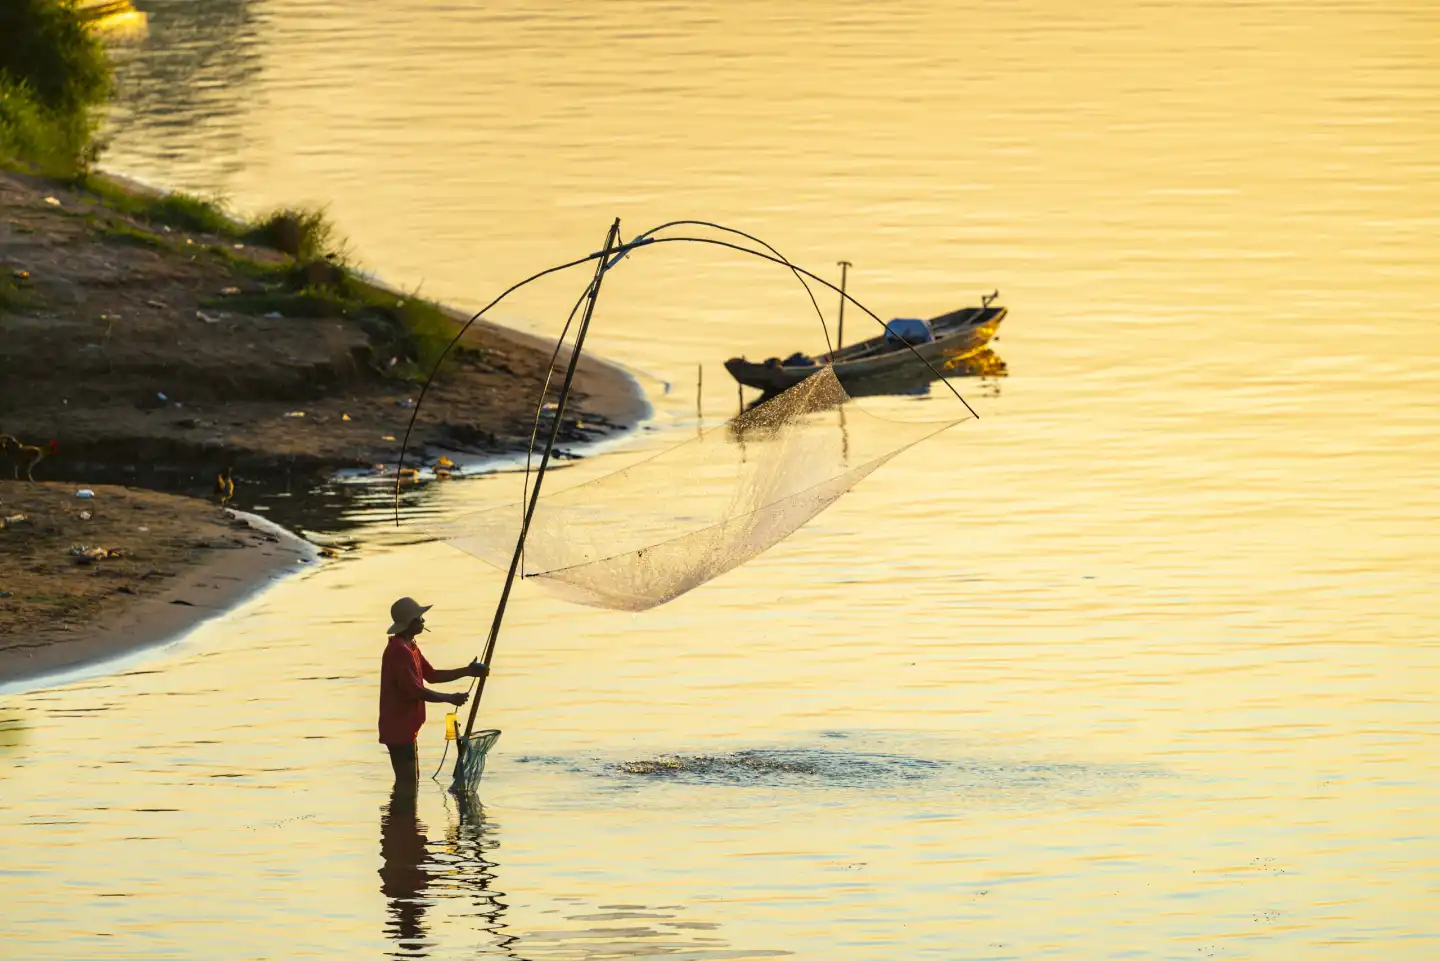 Fisherman with a sinking net at sunset on the Mekong, Luang Prabang, Laos, Asia